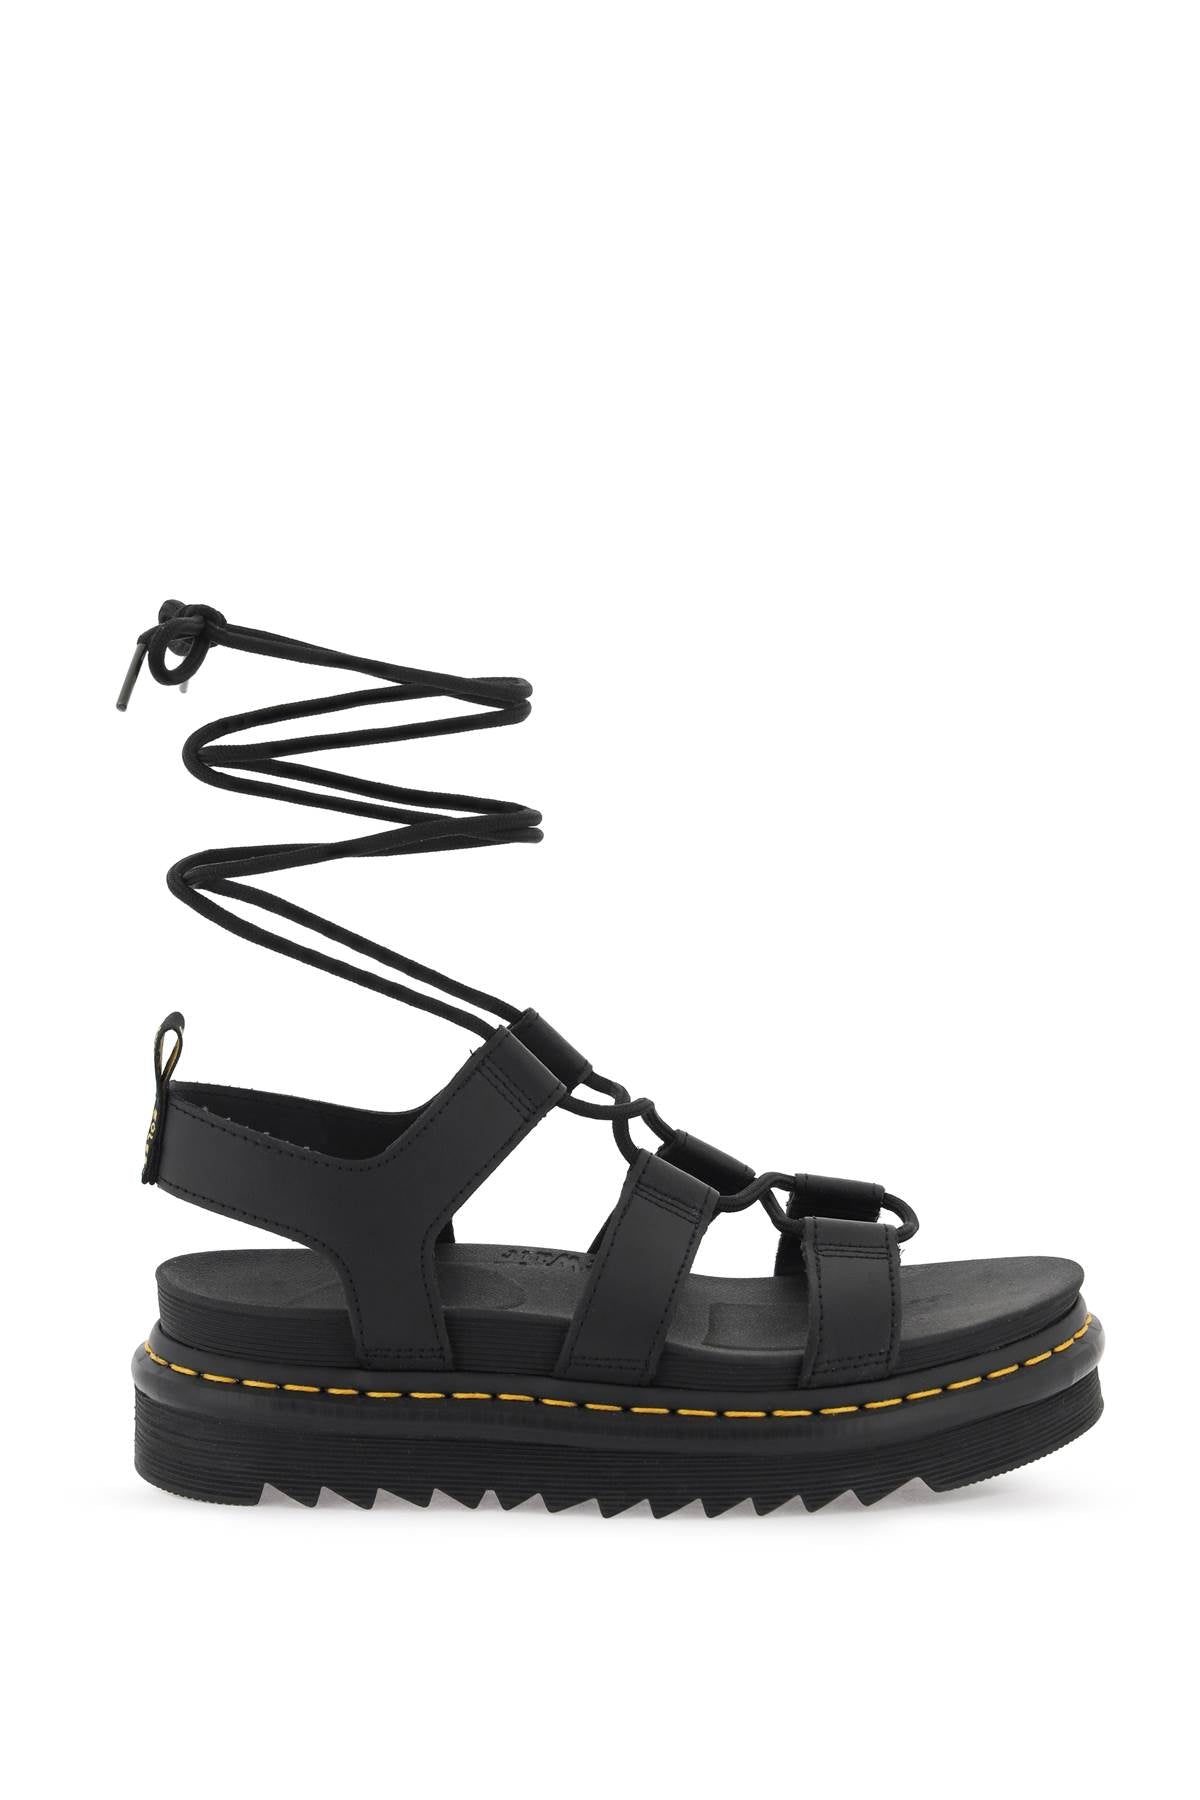 Dr.martens nartilla hydro leather gladiator sandals-0